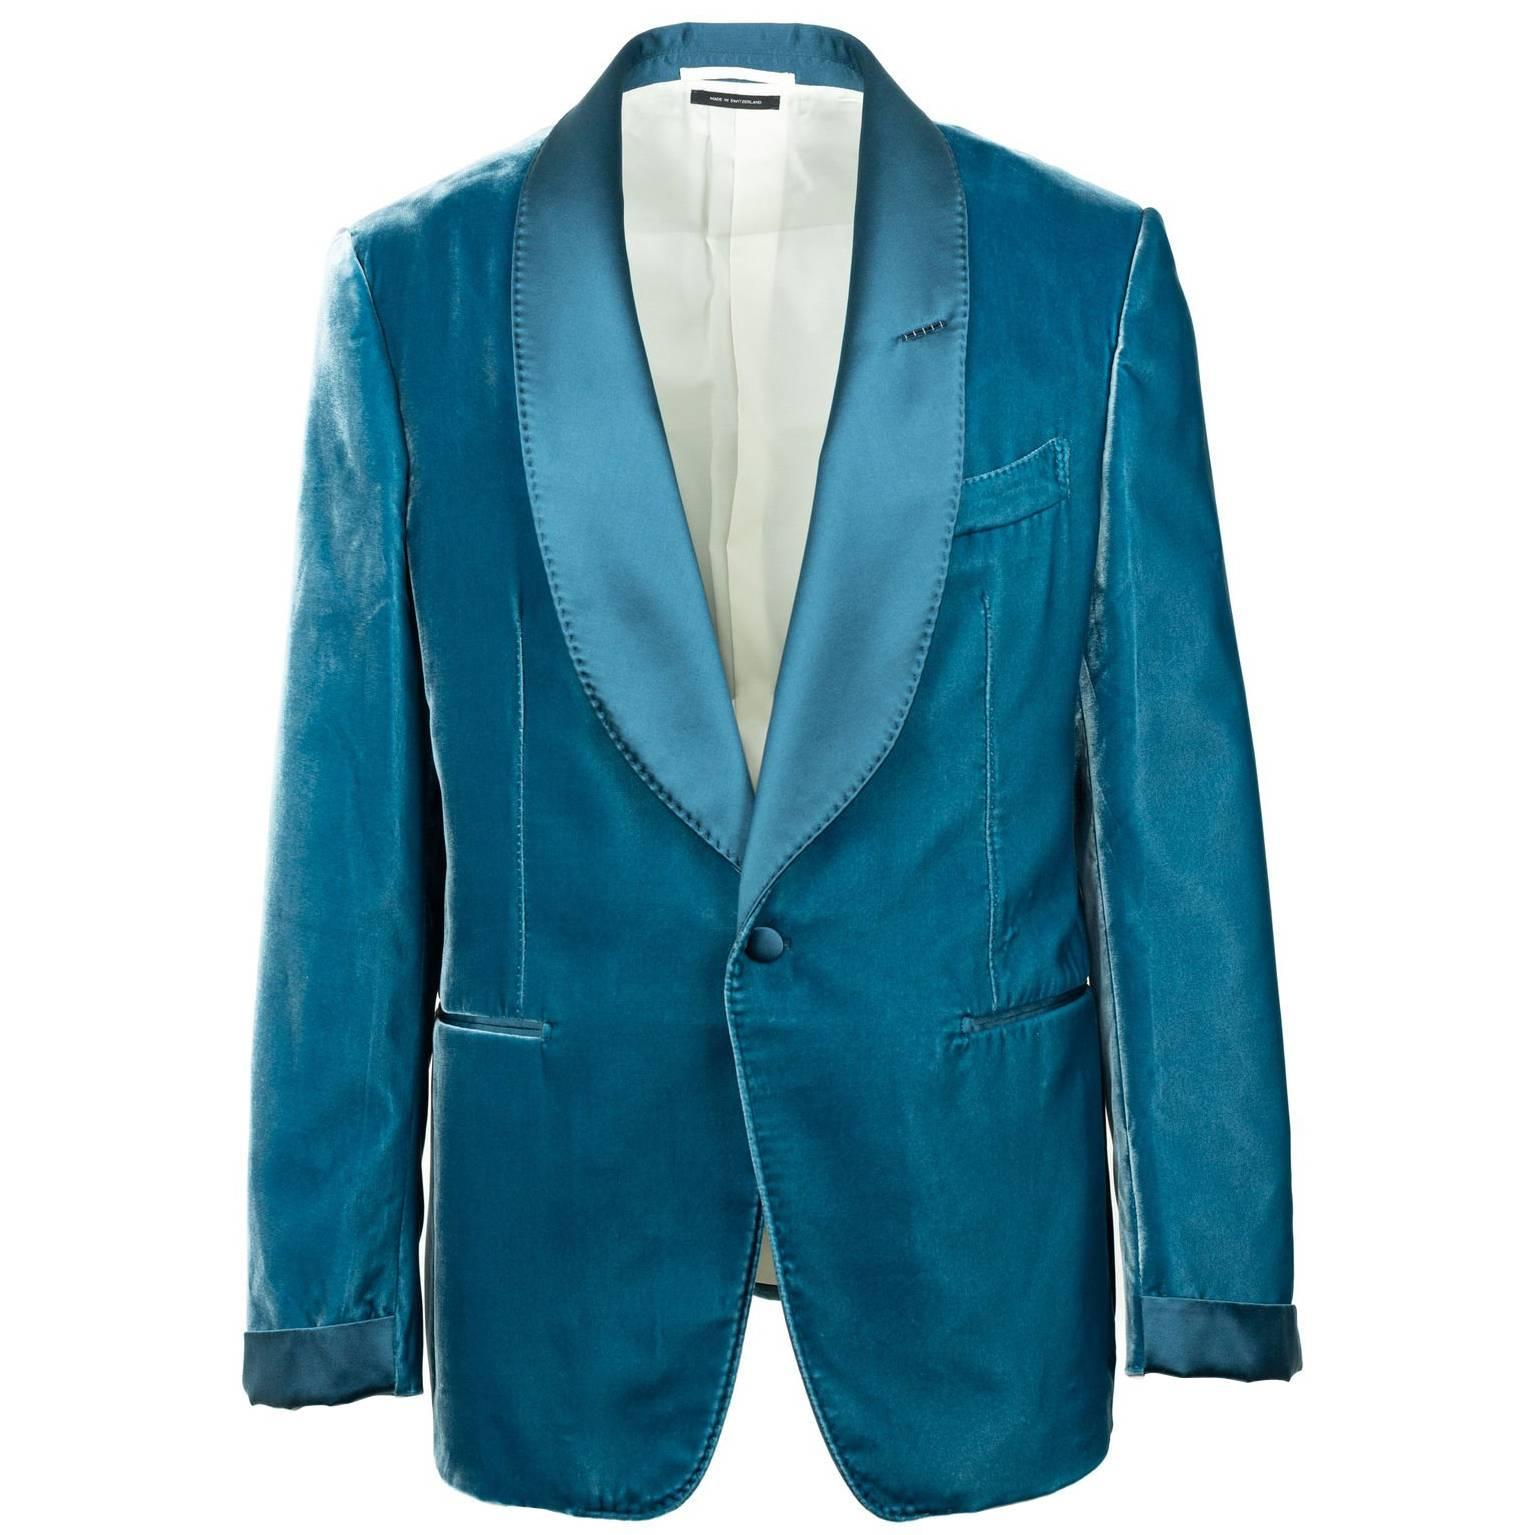 Tom Ford Aqua Blue Velvet Shawl Lapel Shelton Cocktail Jacket Sz52R/42R RTL$3980 For Sale